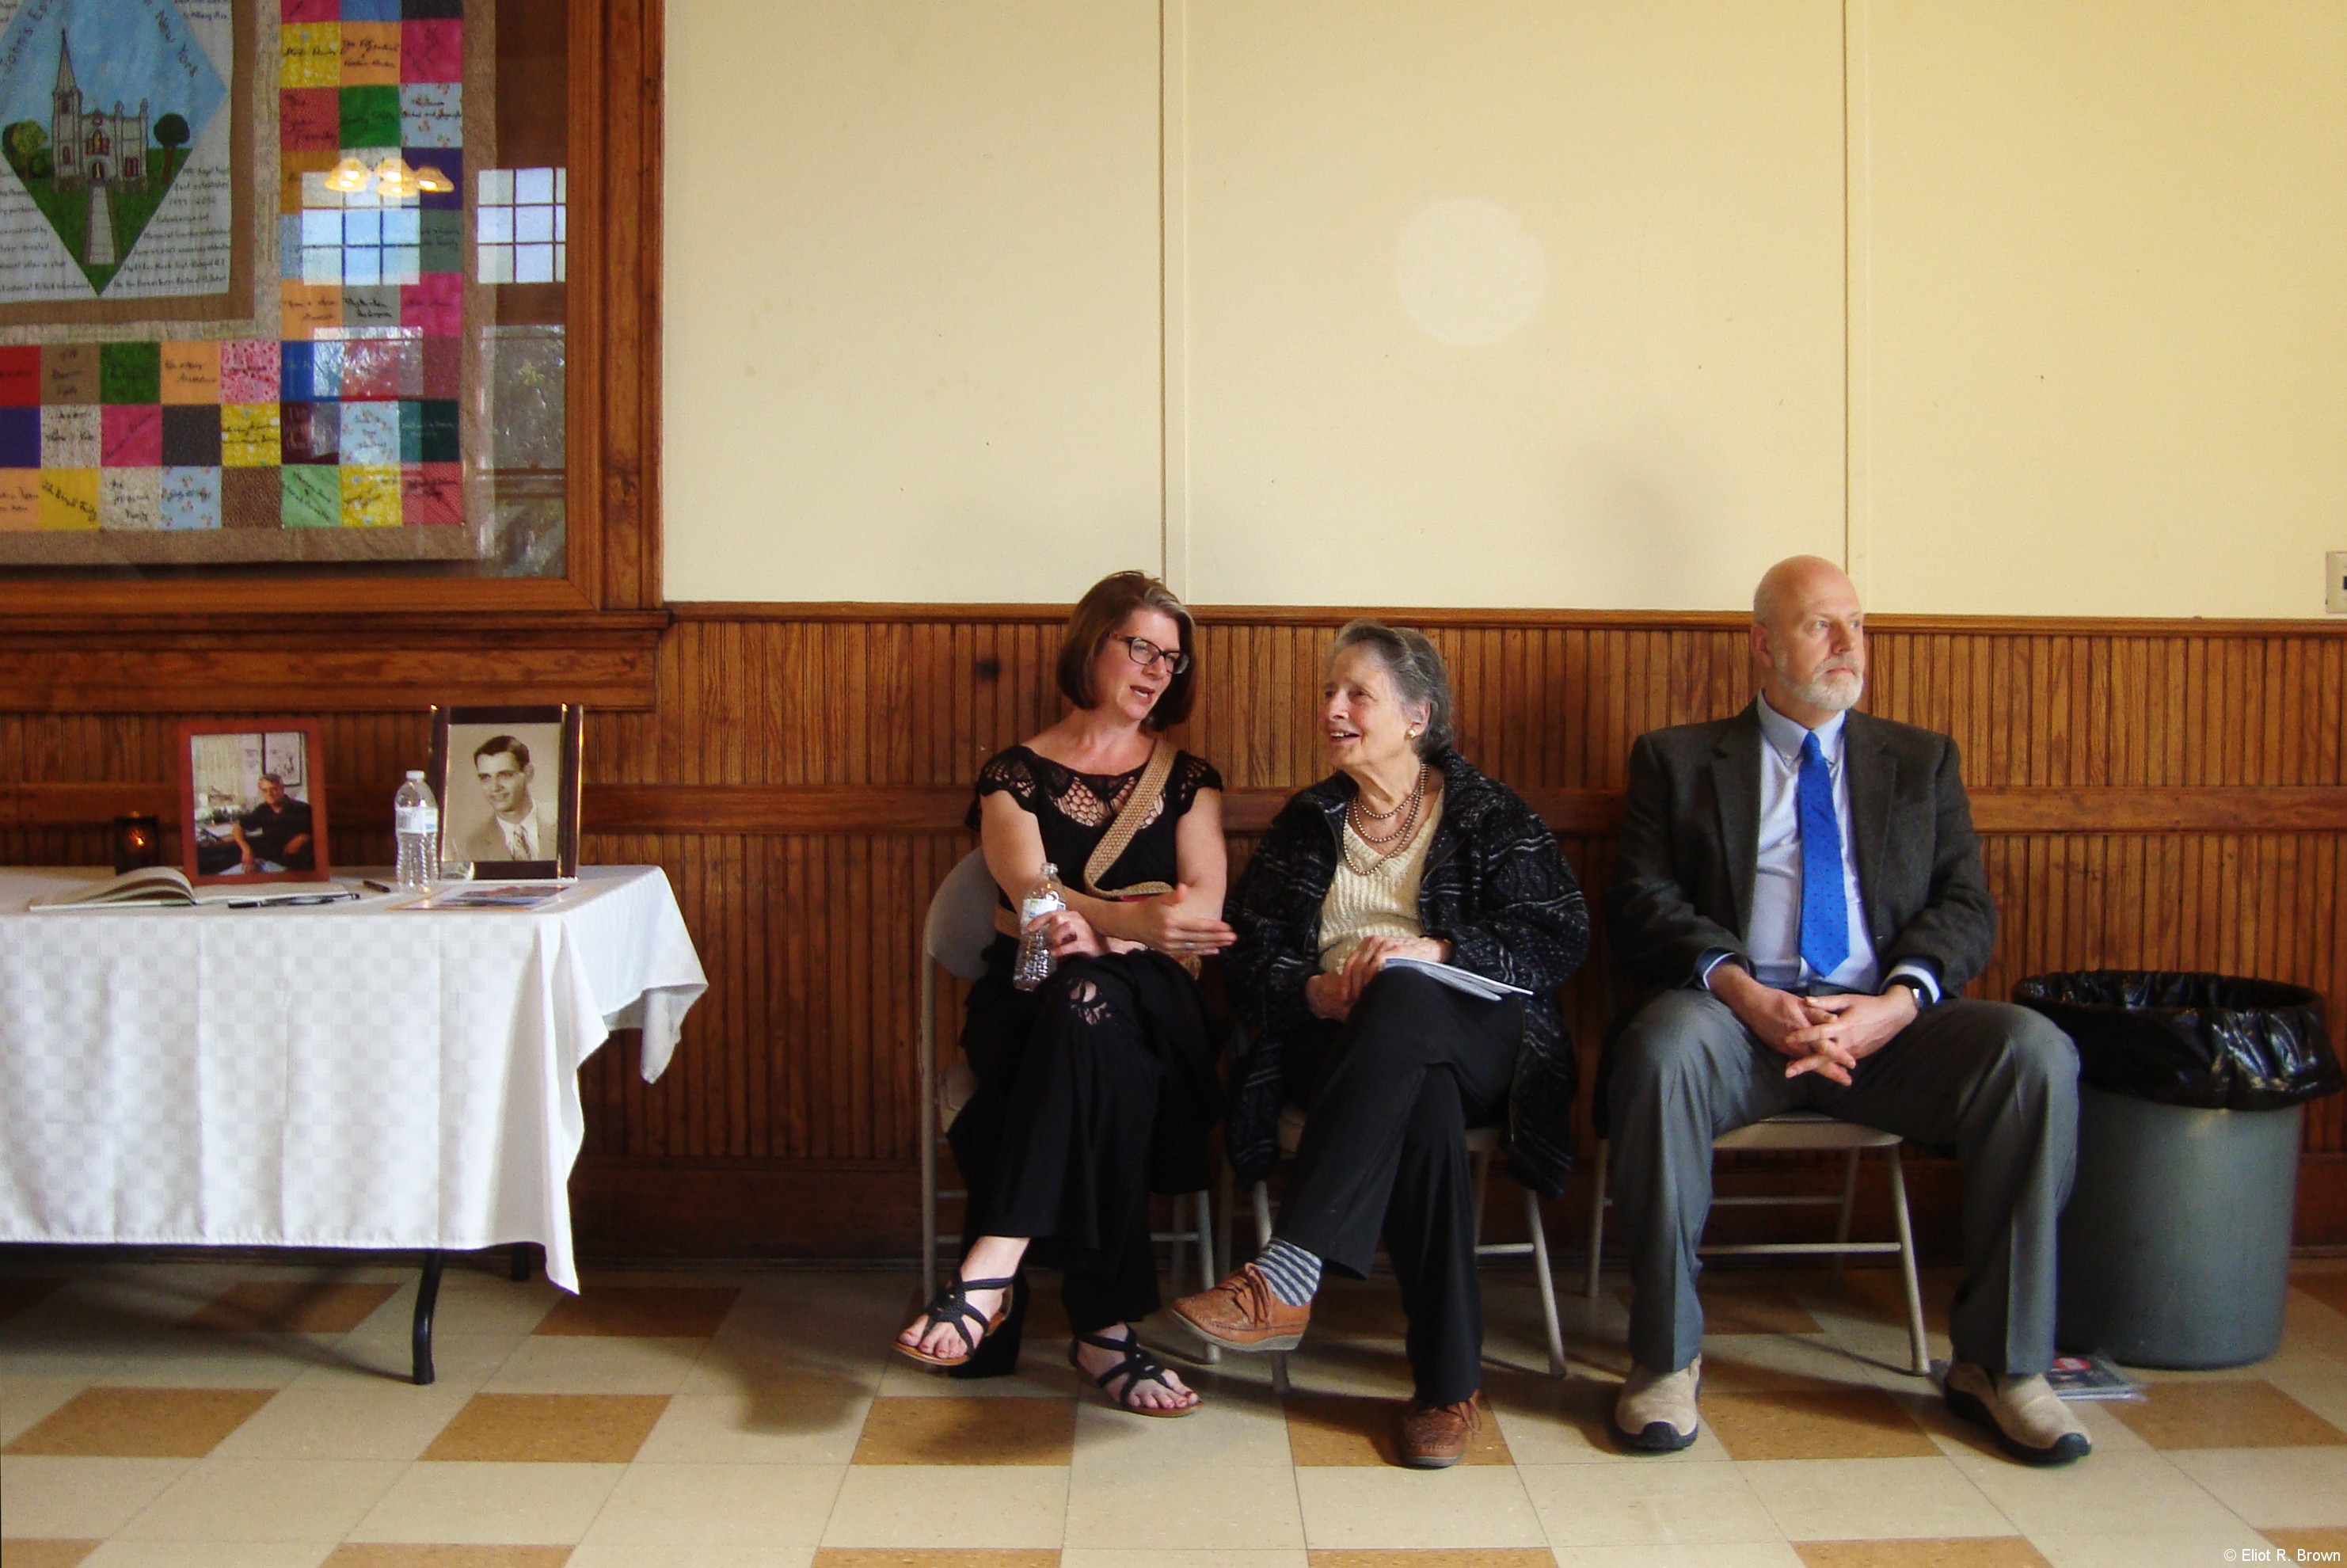 Christie Scheele, Ramona Fredan and Terry Austin reflecting on Herb, St. John's Episcopal Church Parish Hall. Remembering and celebrating Herb Trimpe